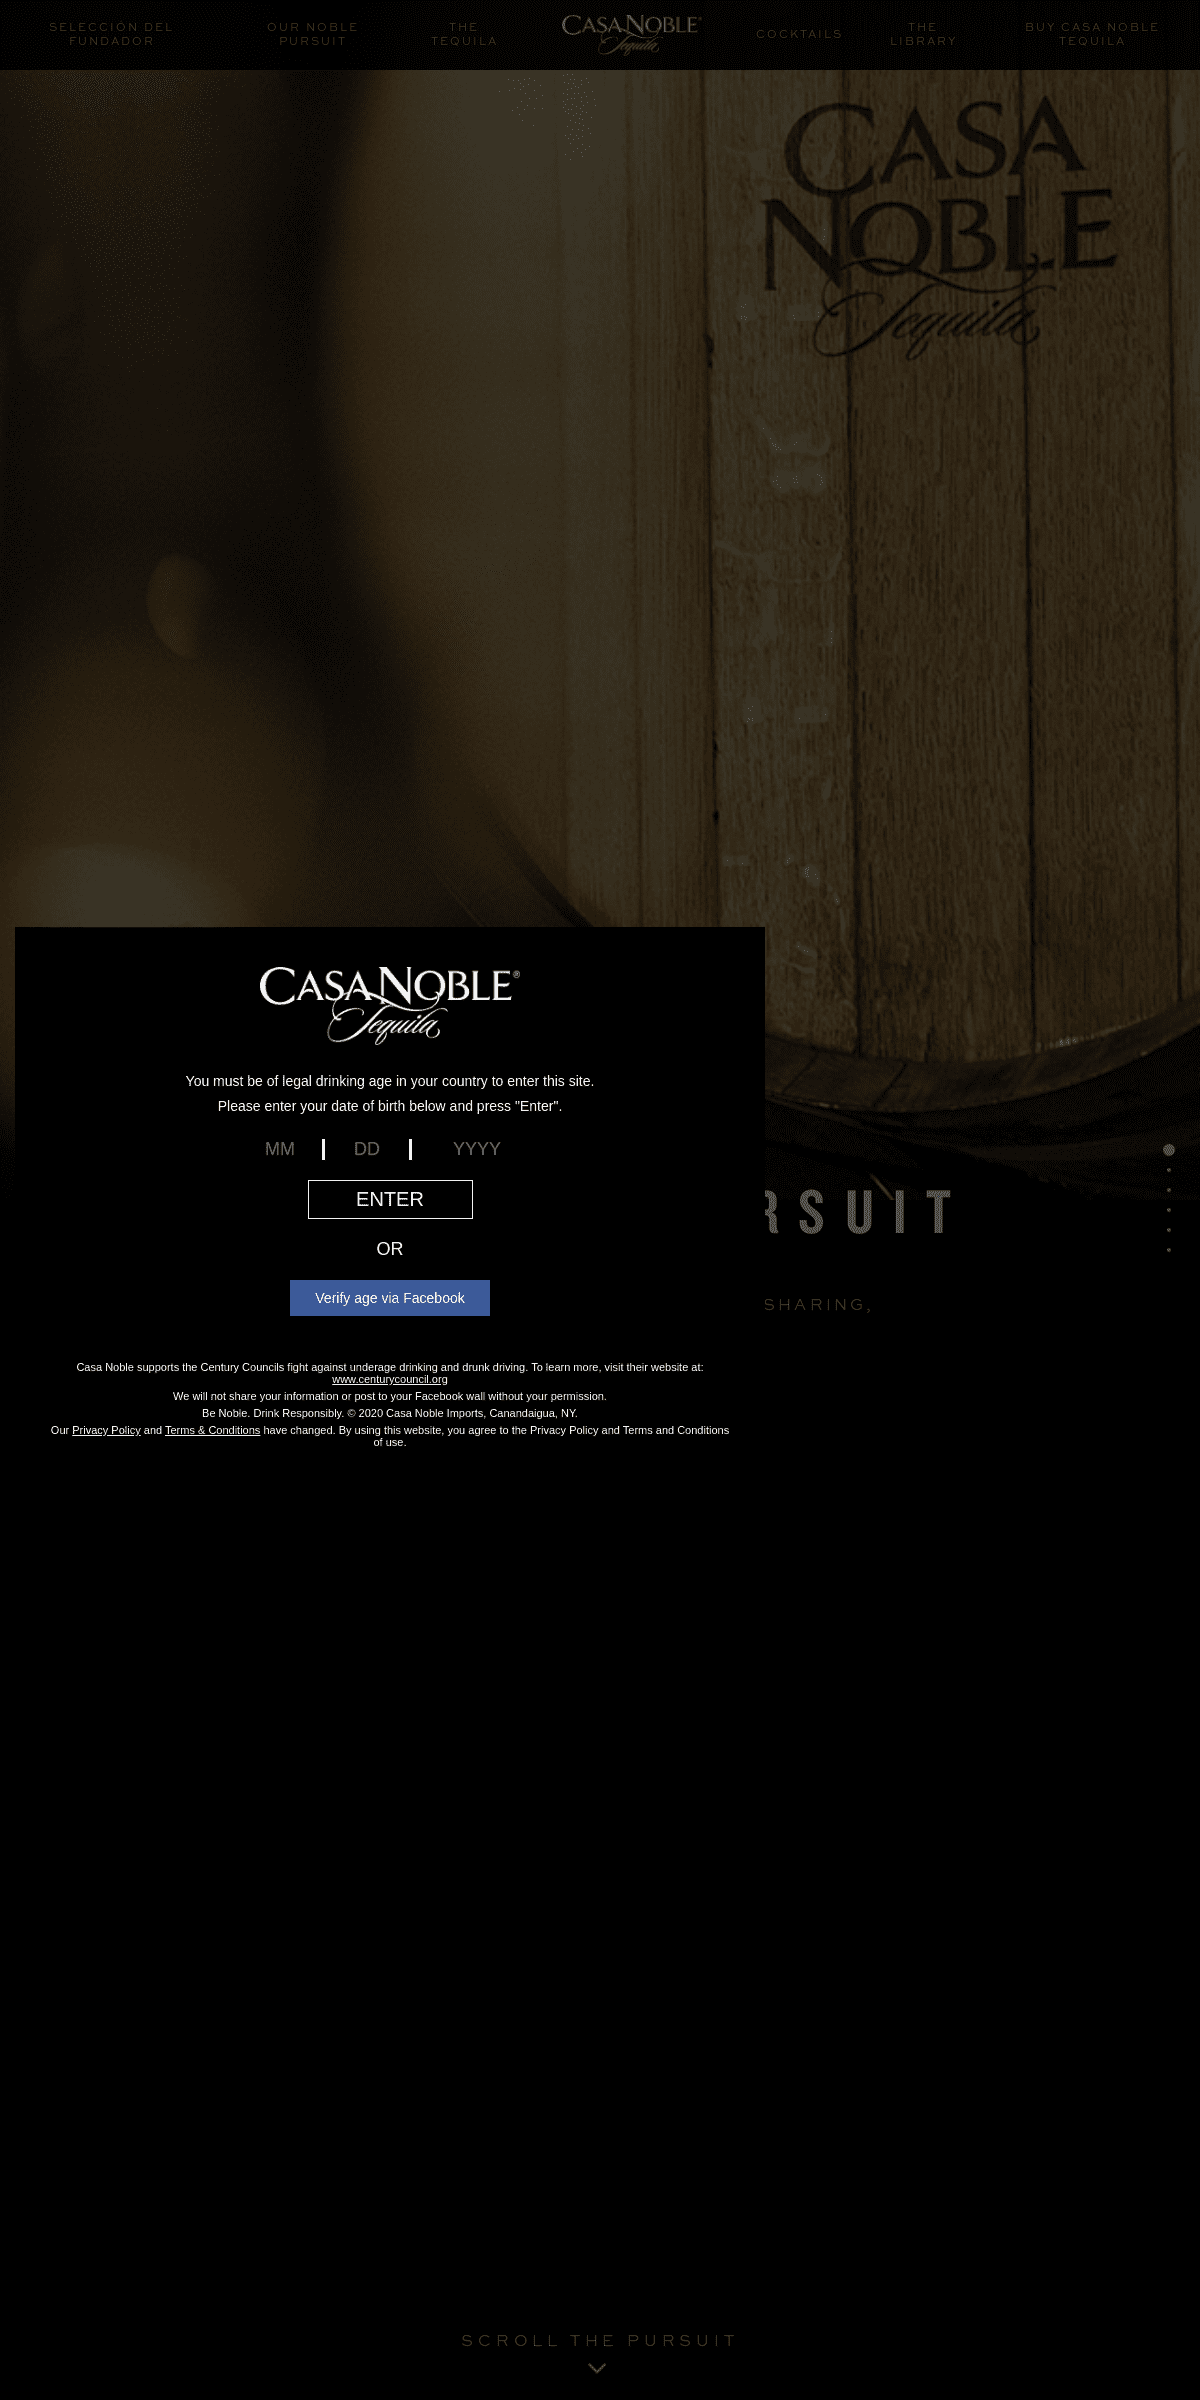 A complete backup of casanoble.com